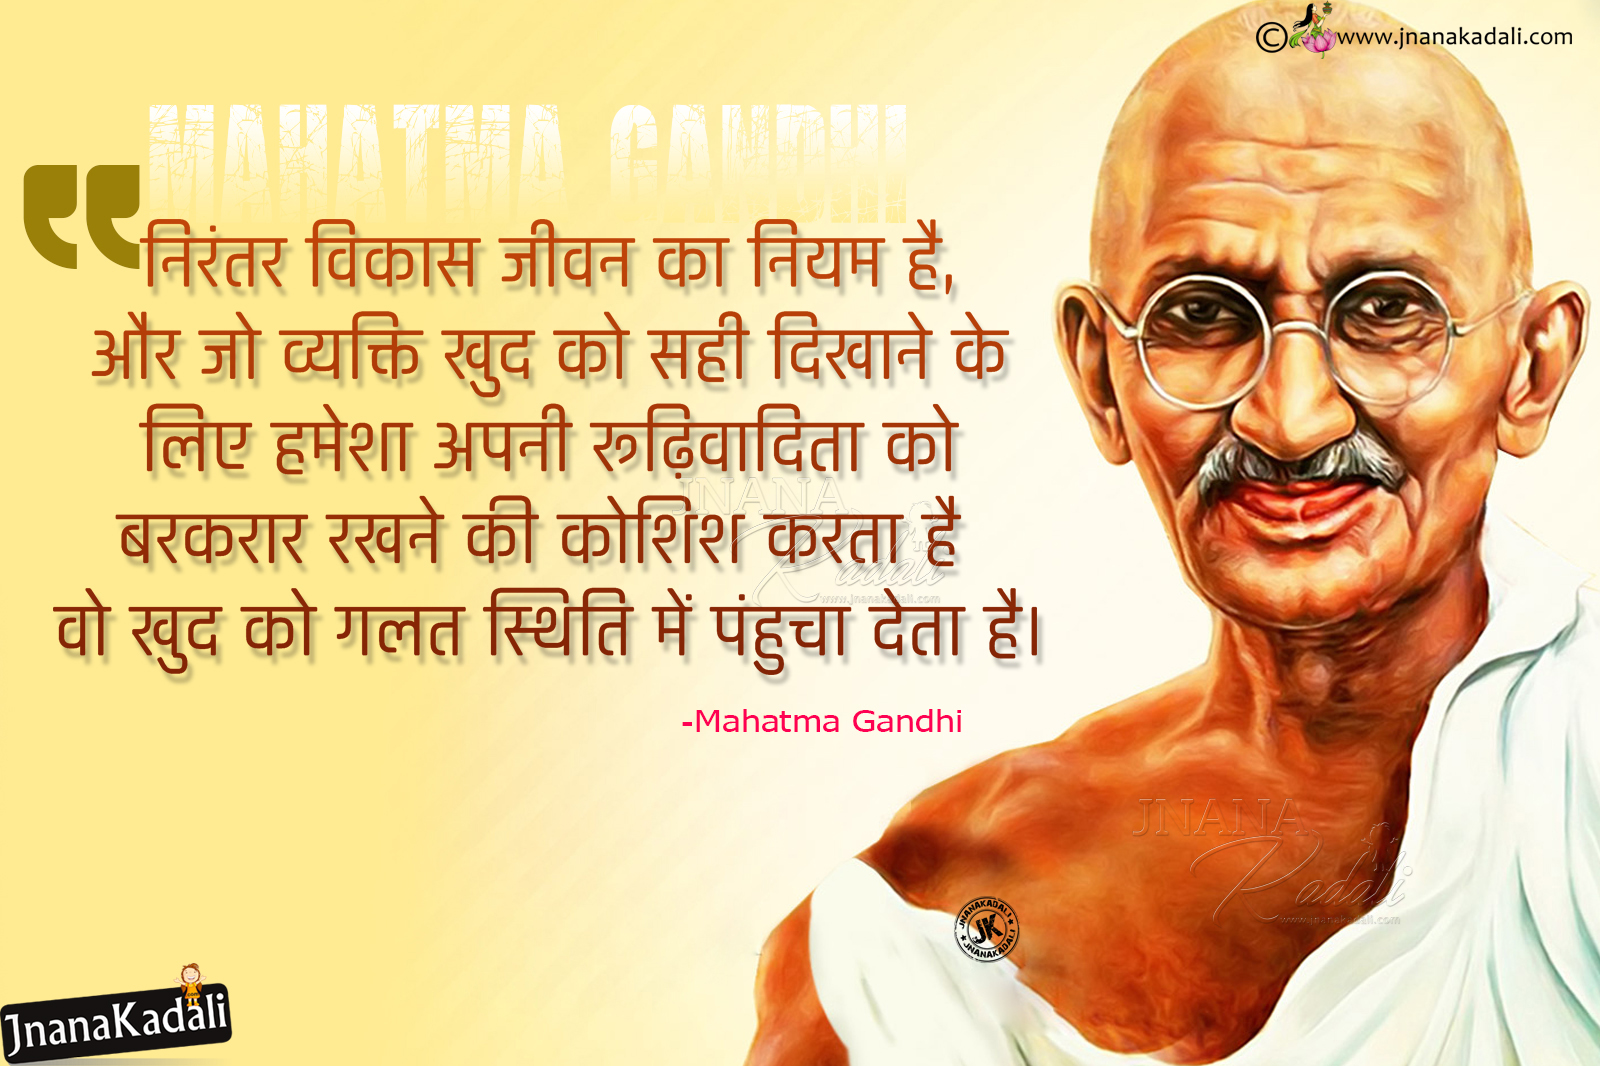 Mahatma gandhi birthday - studentwes